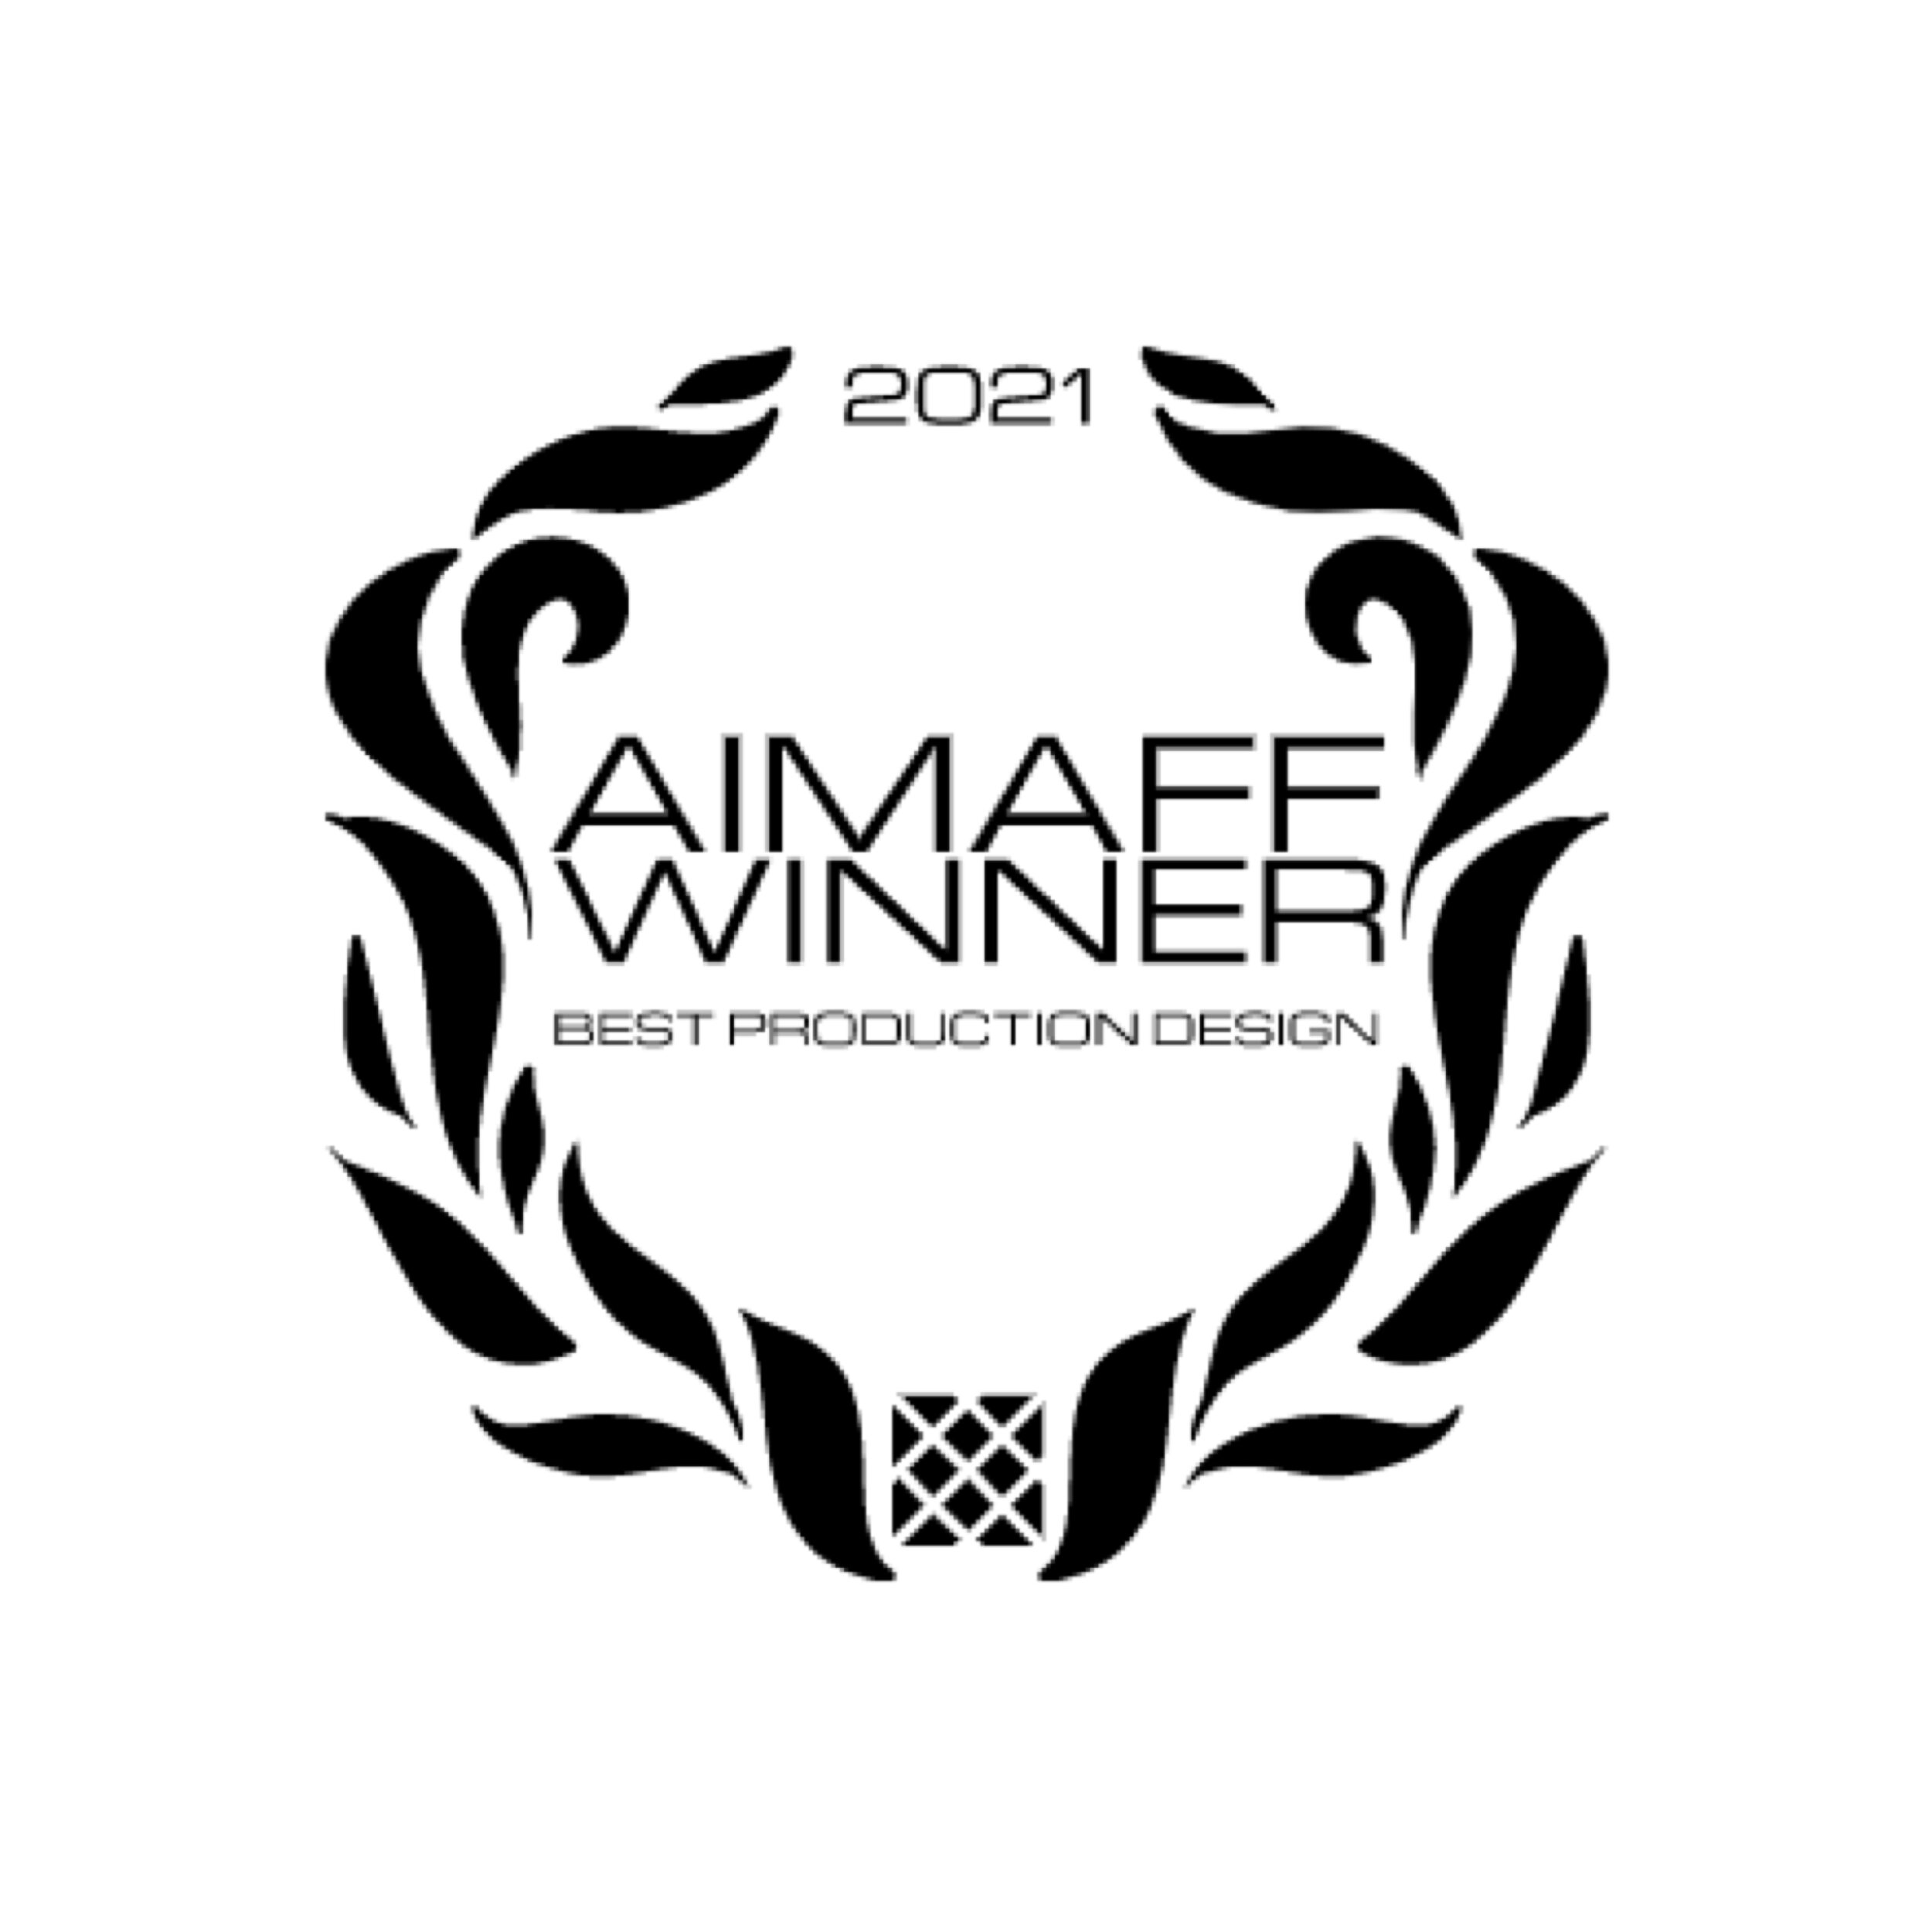 AIMAFF_Winner_Best_Production_Design_SQUARE.jpg